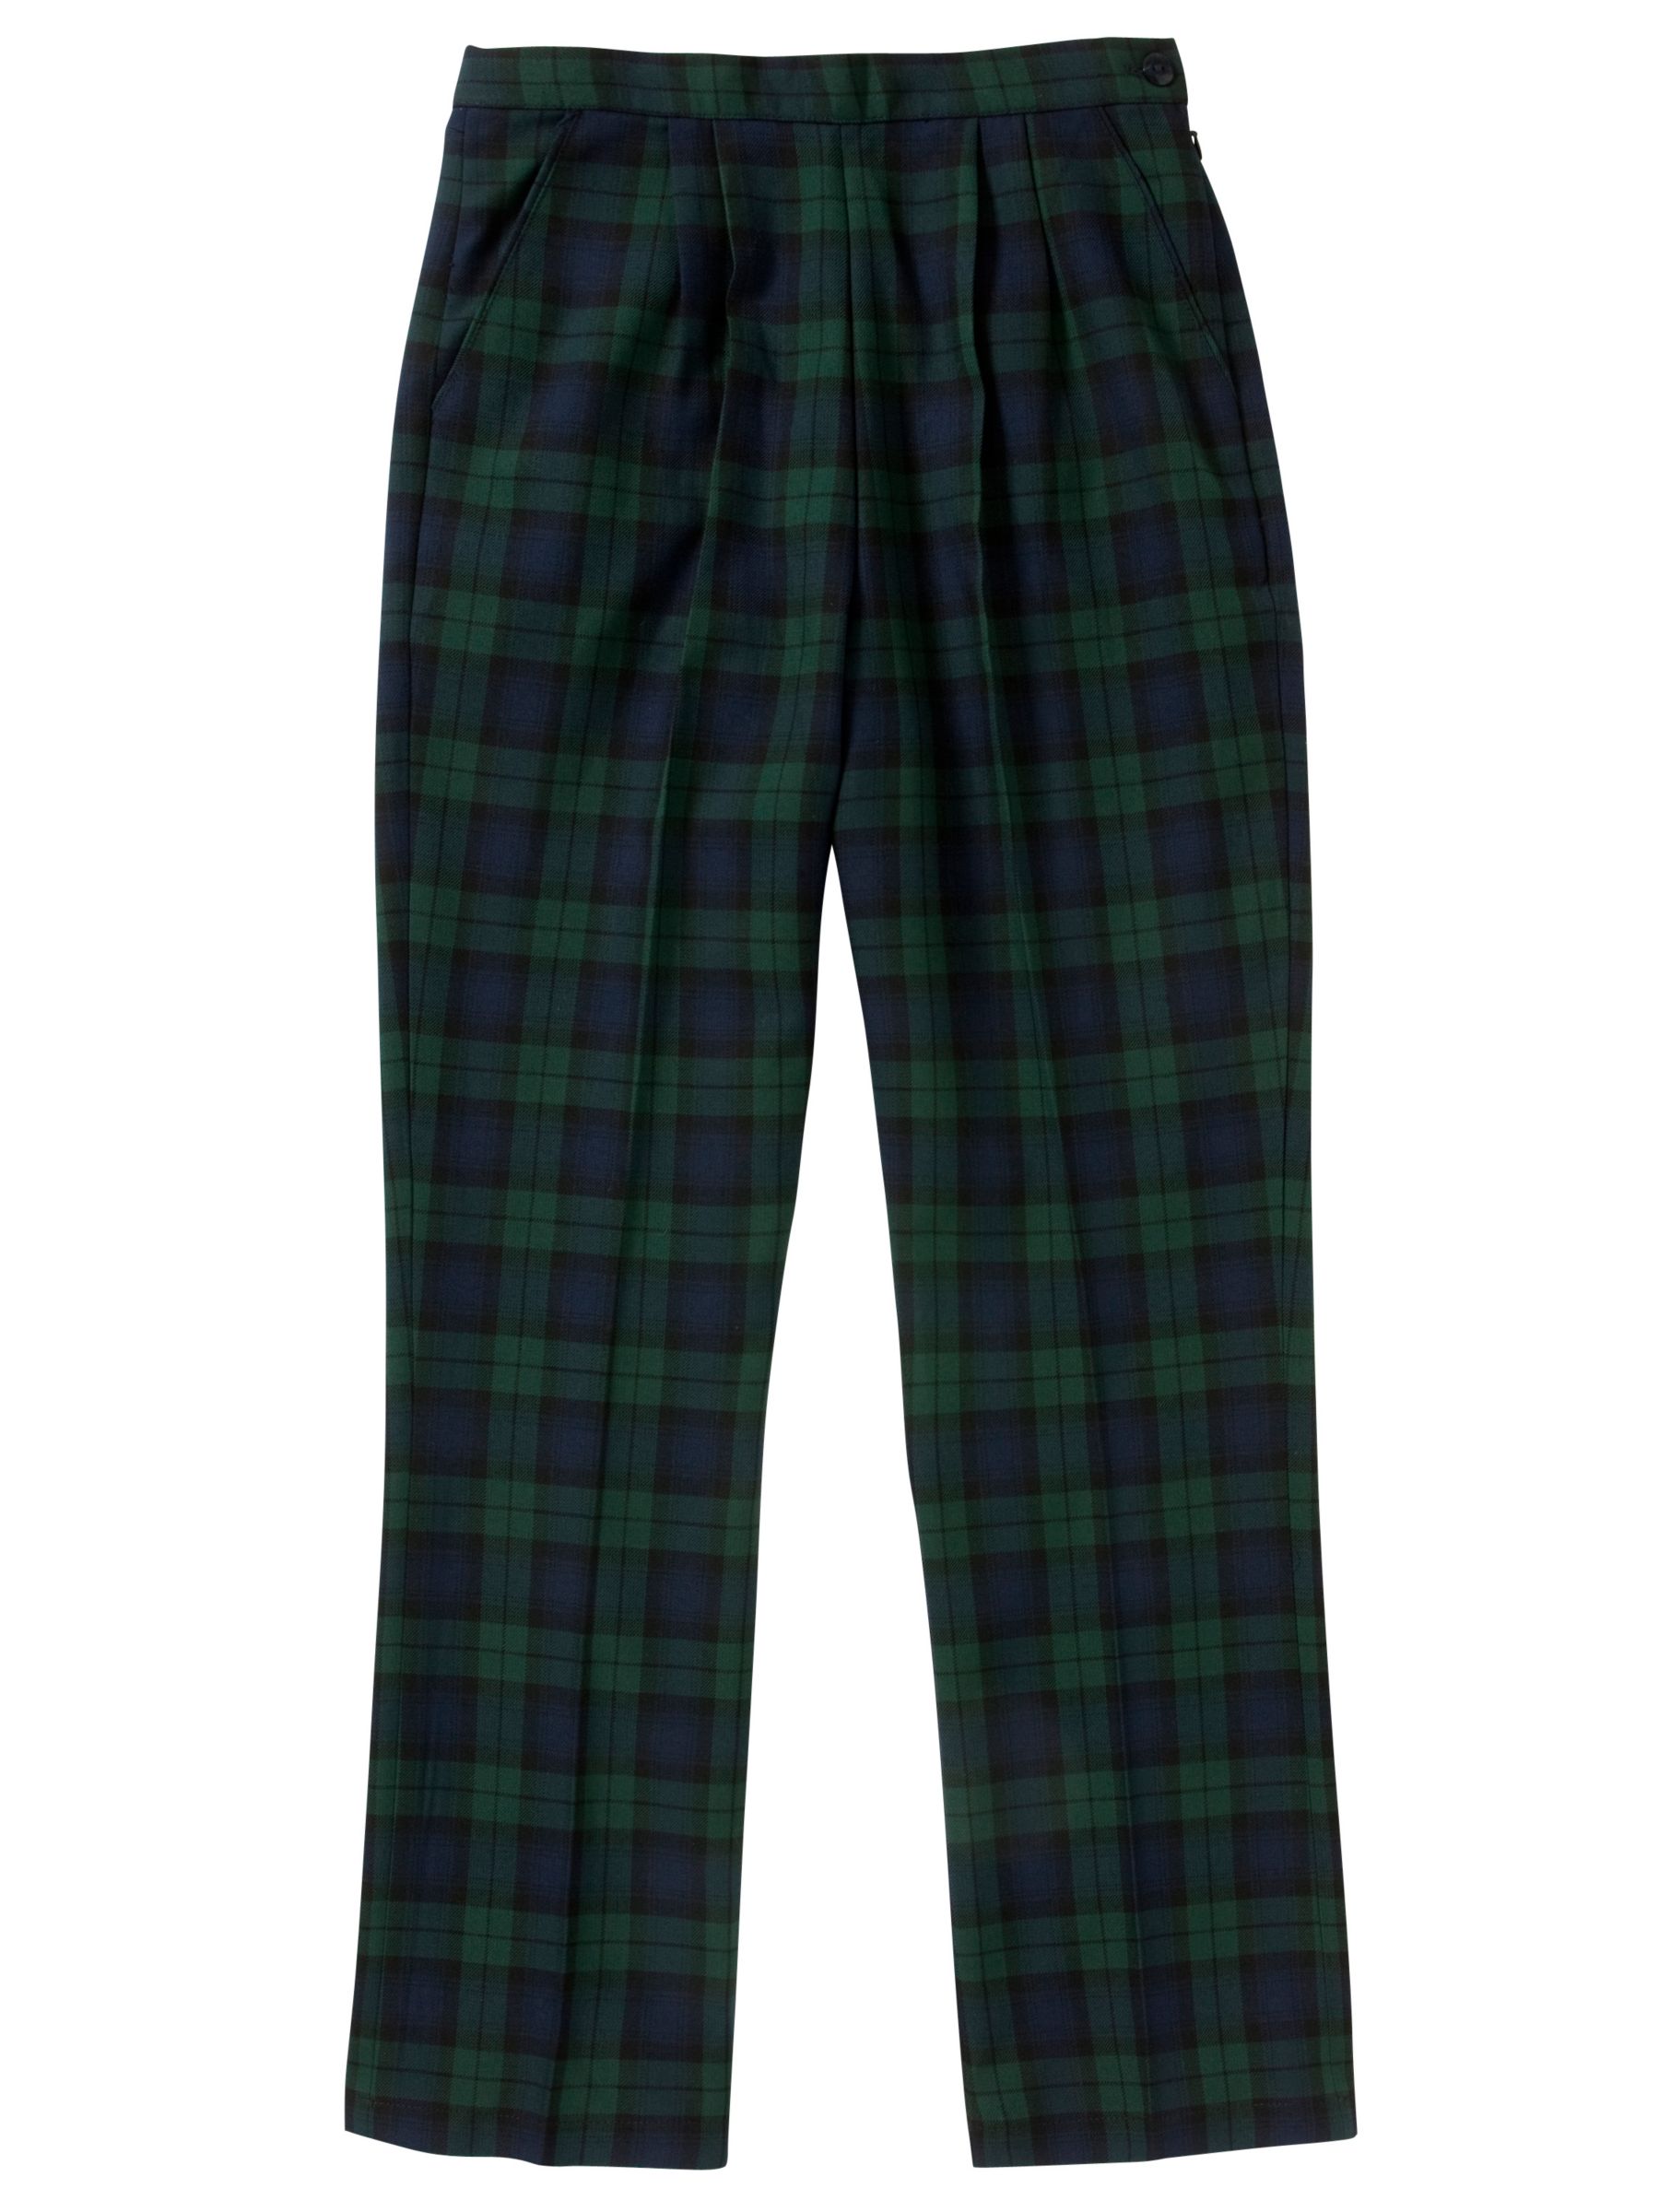 Buy Copthall School Girls' Tartan Trousers, Multi | John Lewis